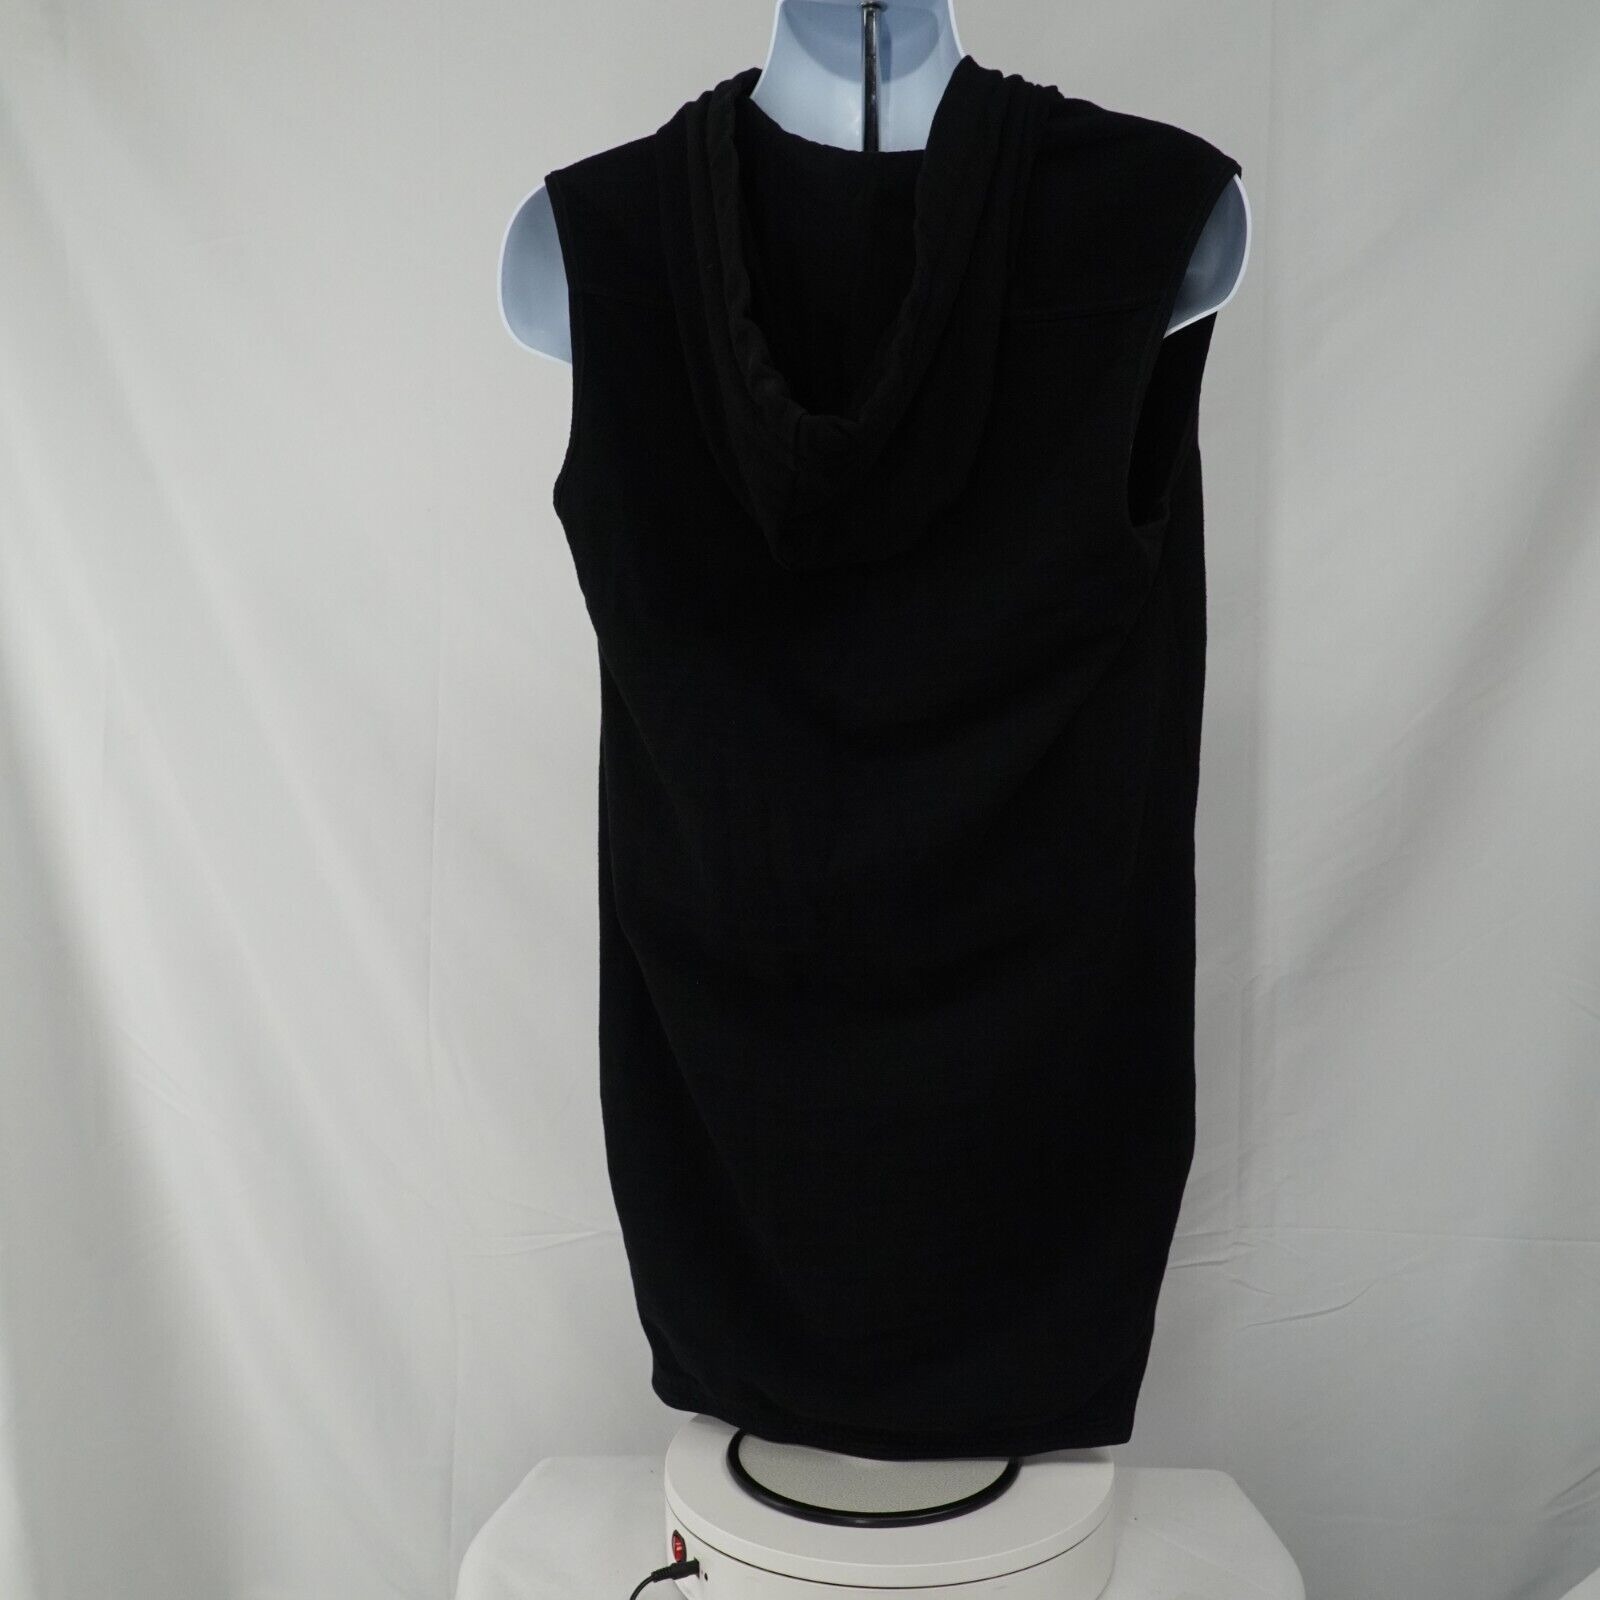 Black Zip Up Sleeveless Jacket Hoodie Cotton - Medium - 15